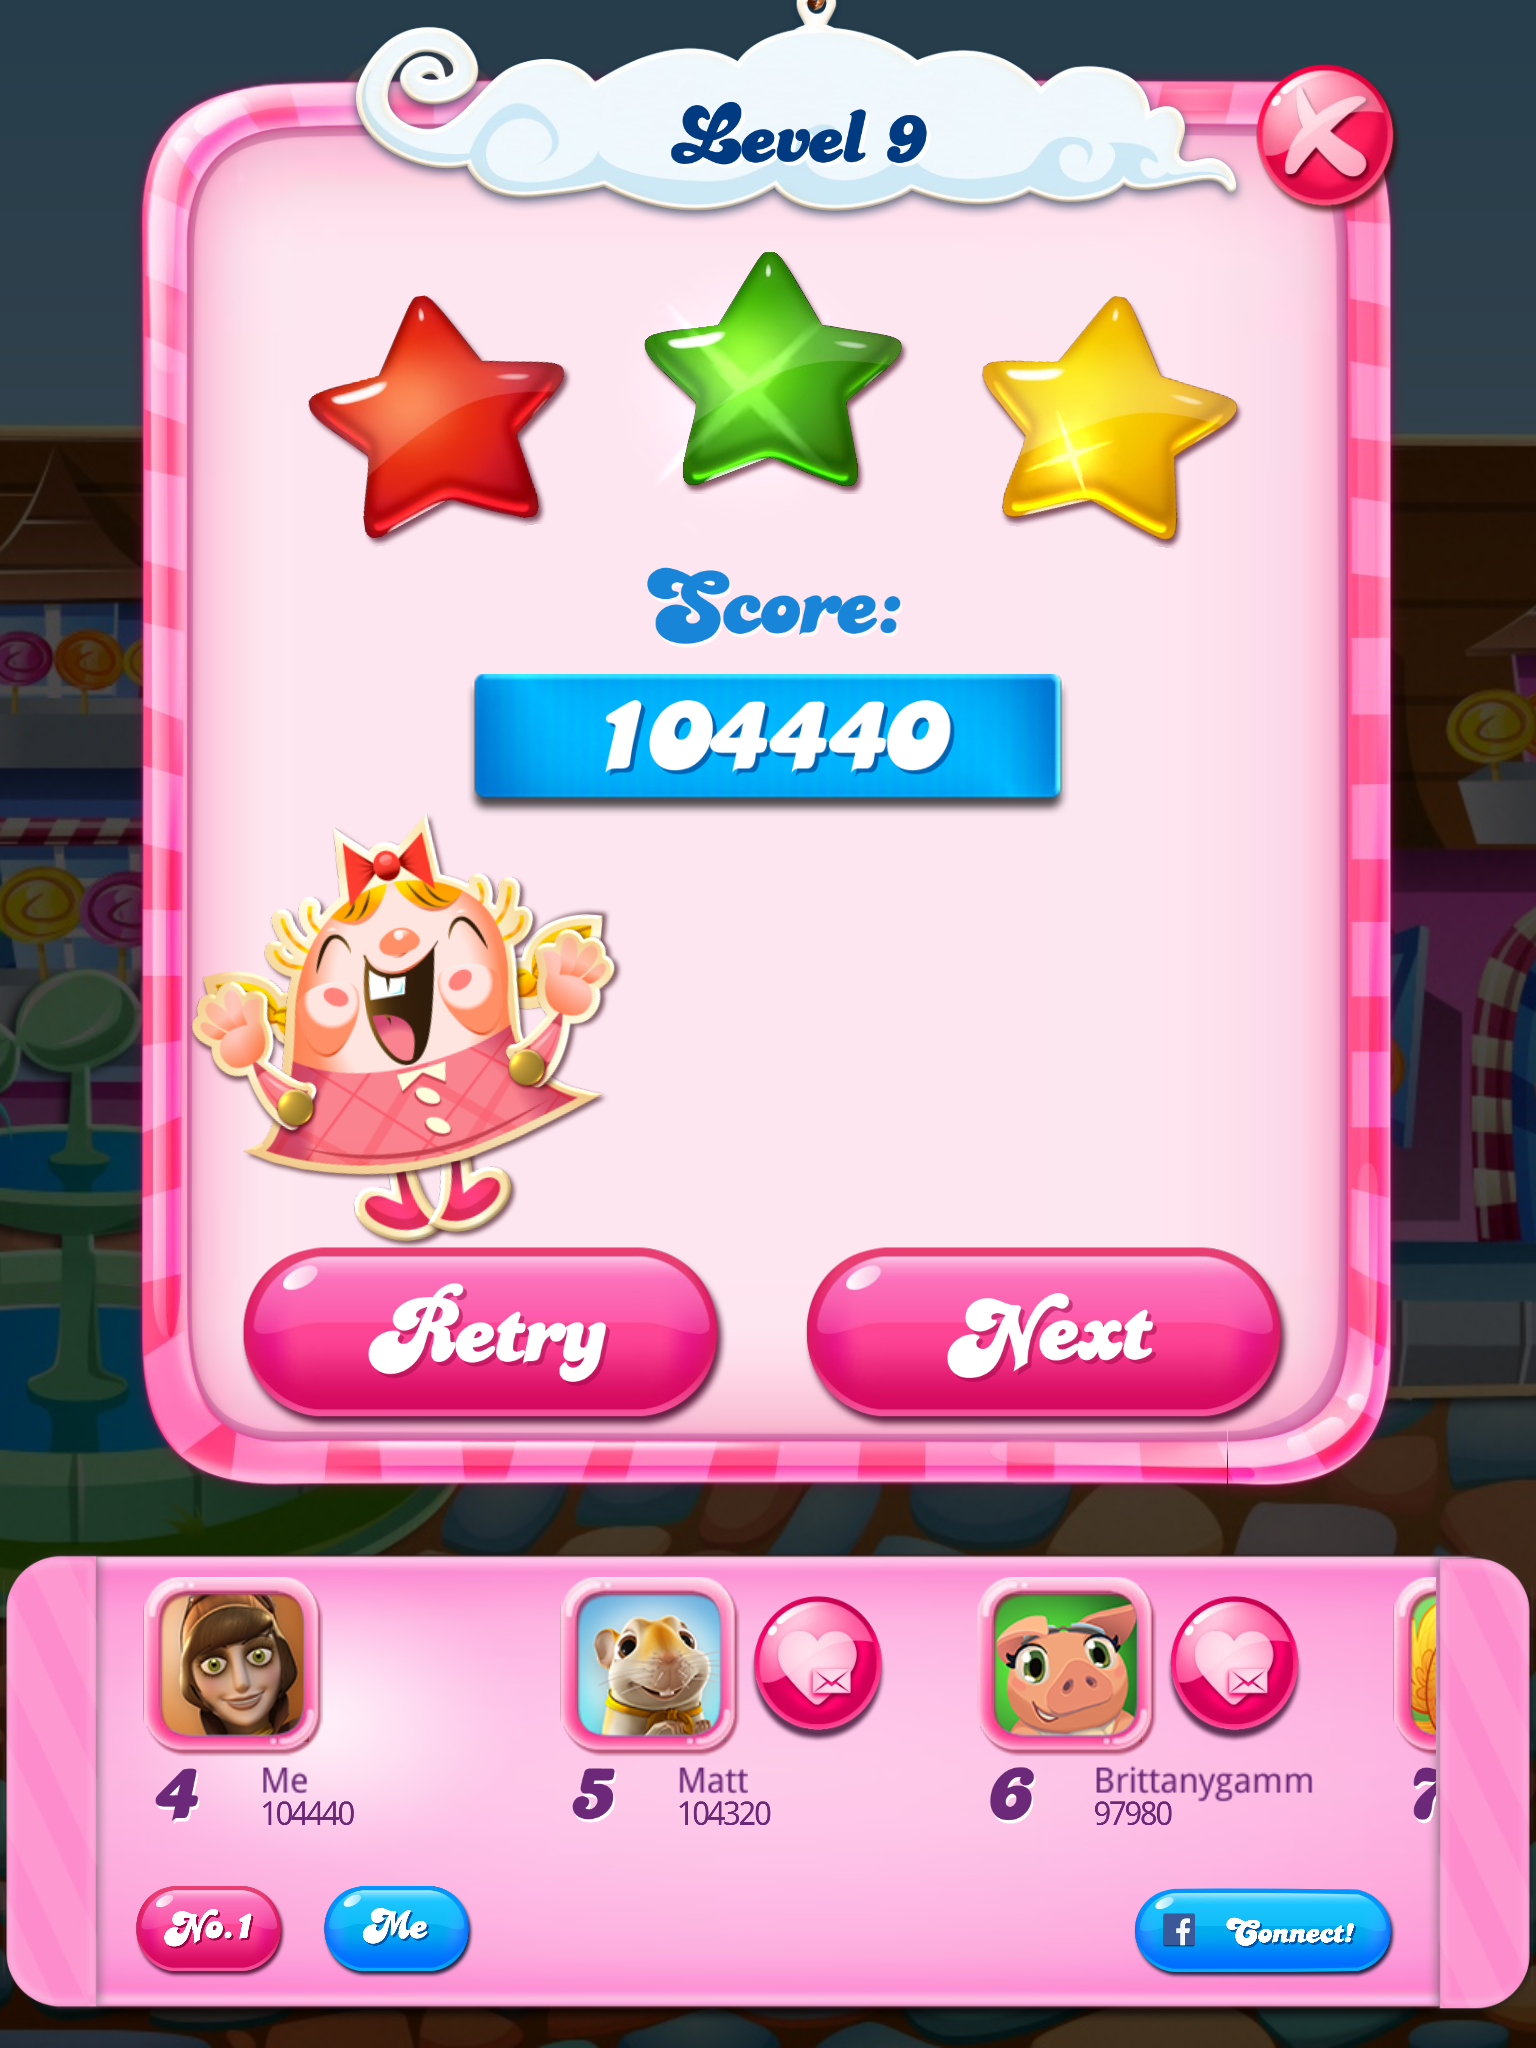 Candy Crush Saga: Level 009 104,440 points